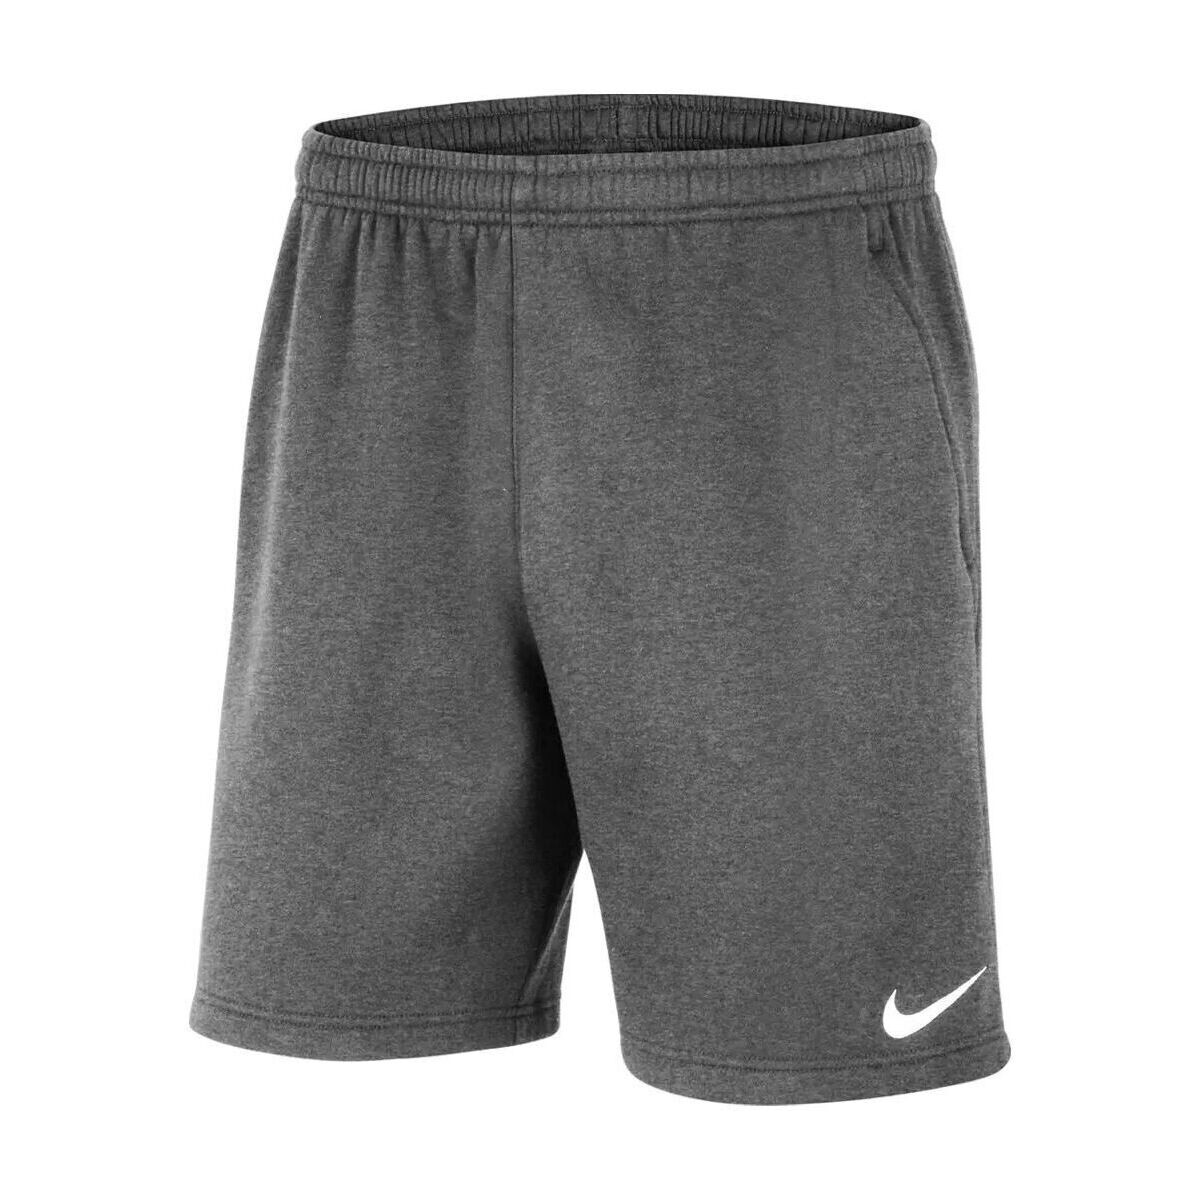 Kleidung Herren Shorts / Bermudas Nike CW6910 - SHORT-071 Grau